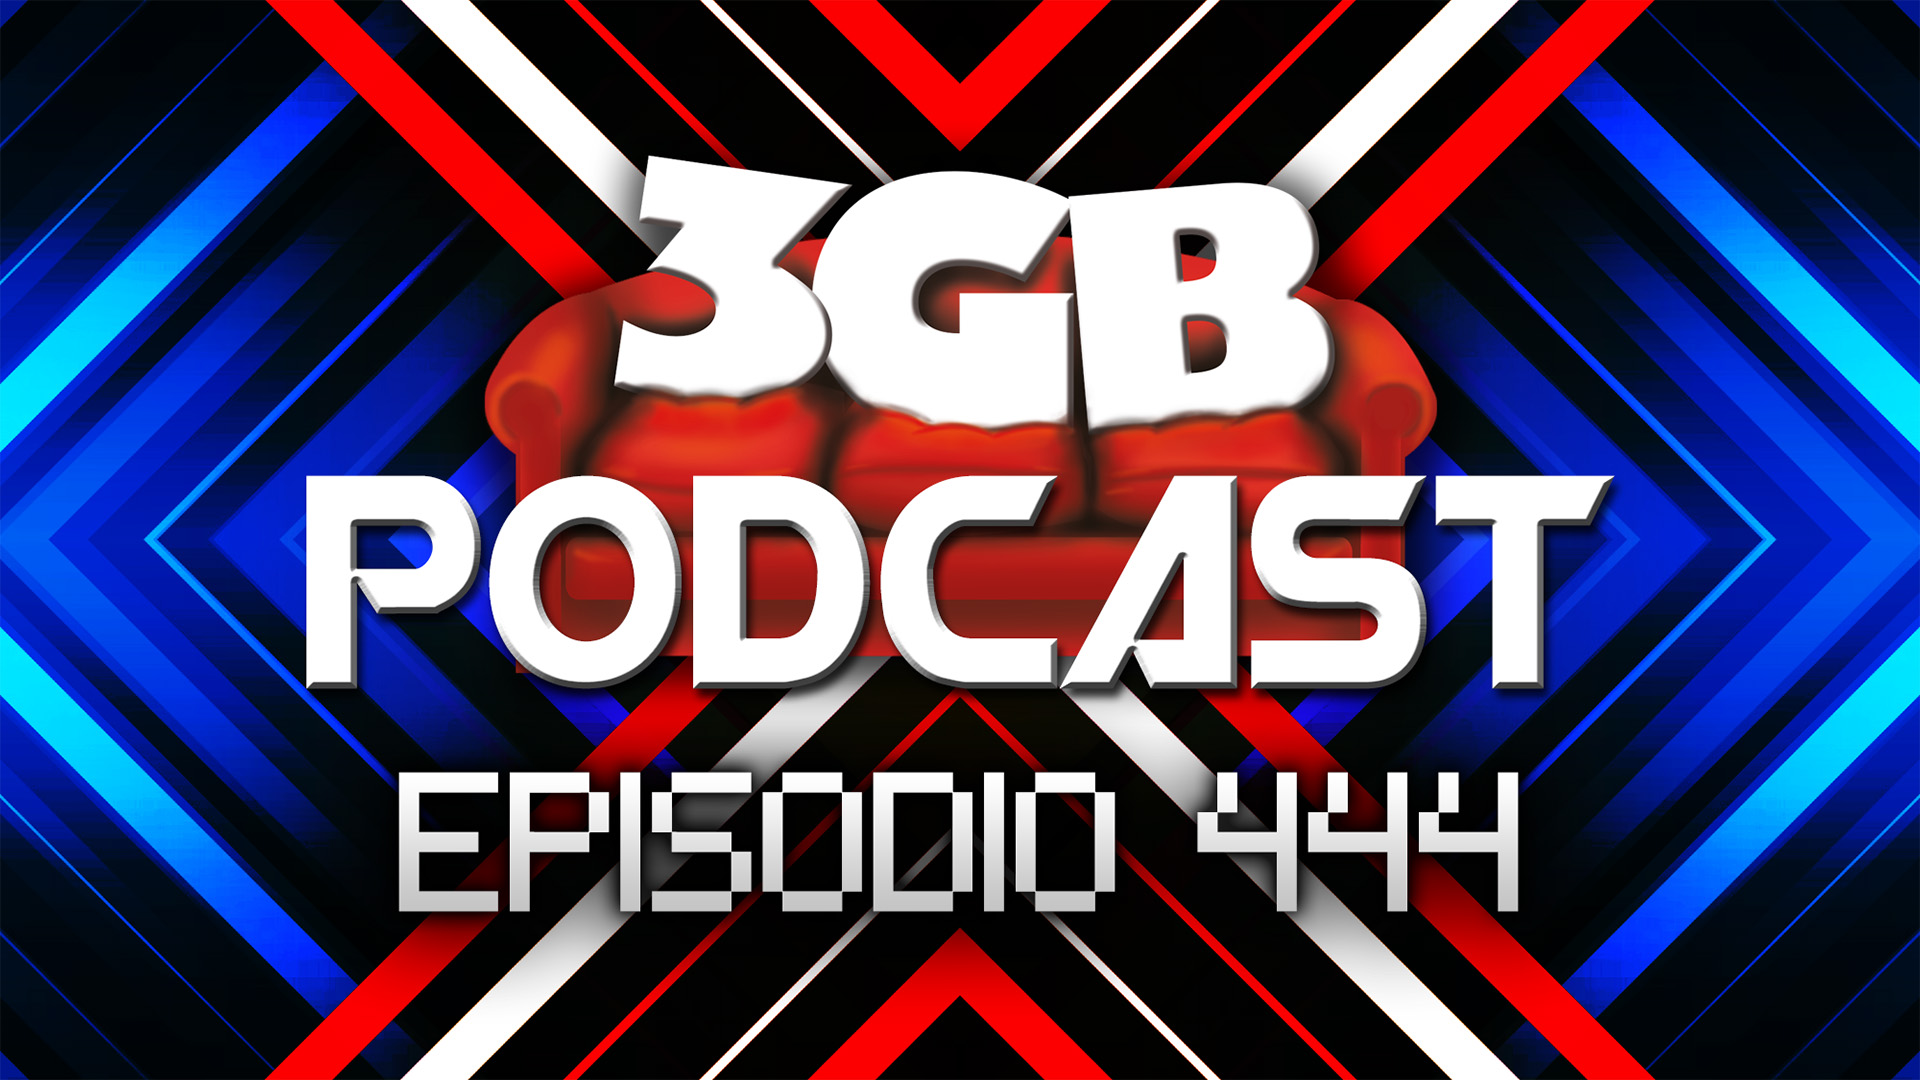 Podcast: Episodio 444, Nintendo Switch Director’s Cut